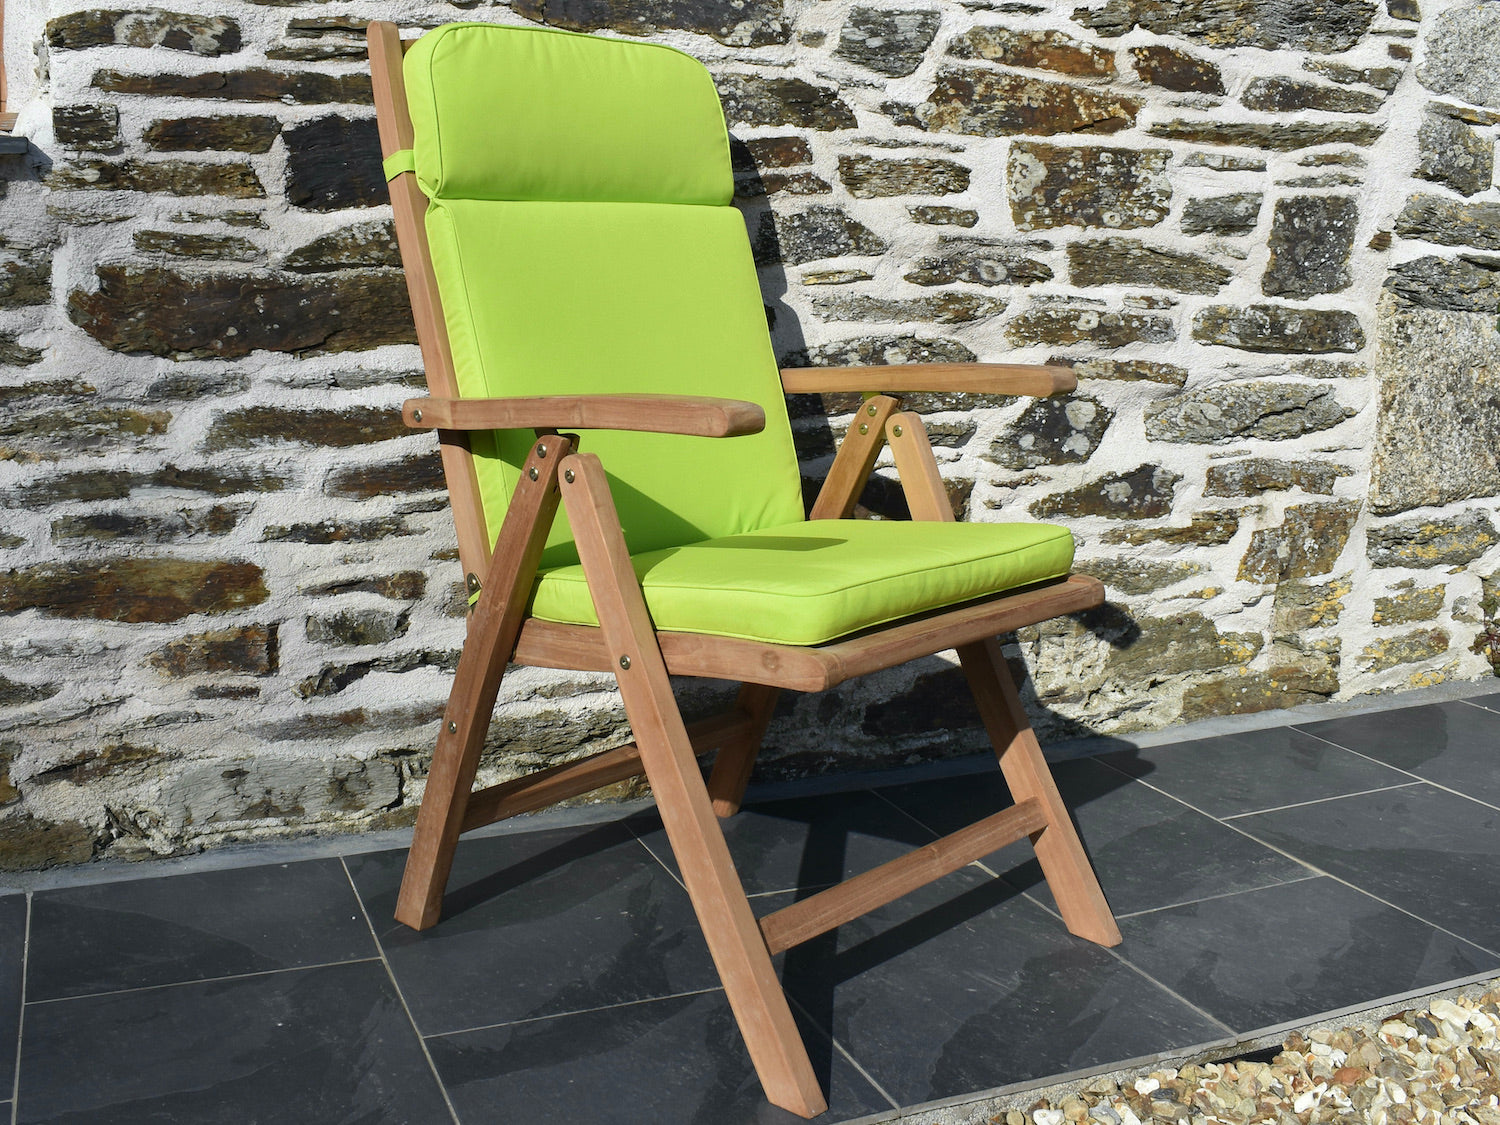 light green colour outdoor cushion for a garden recliner chair